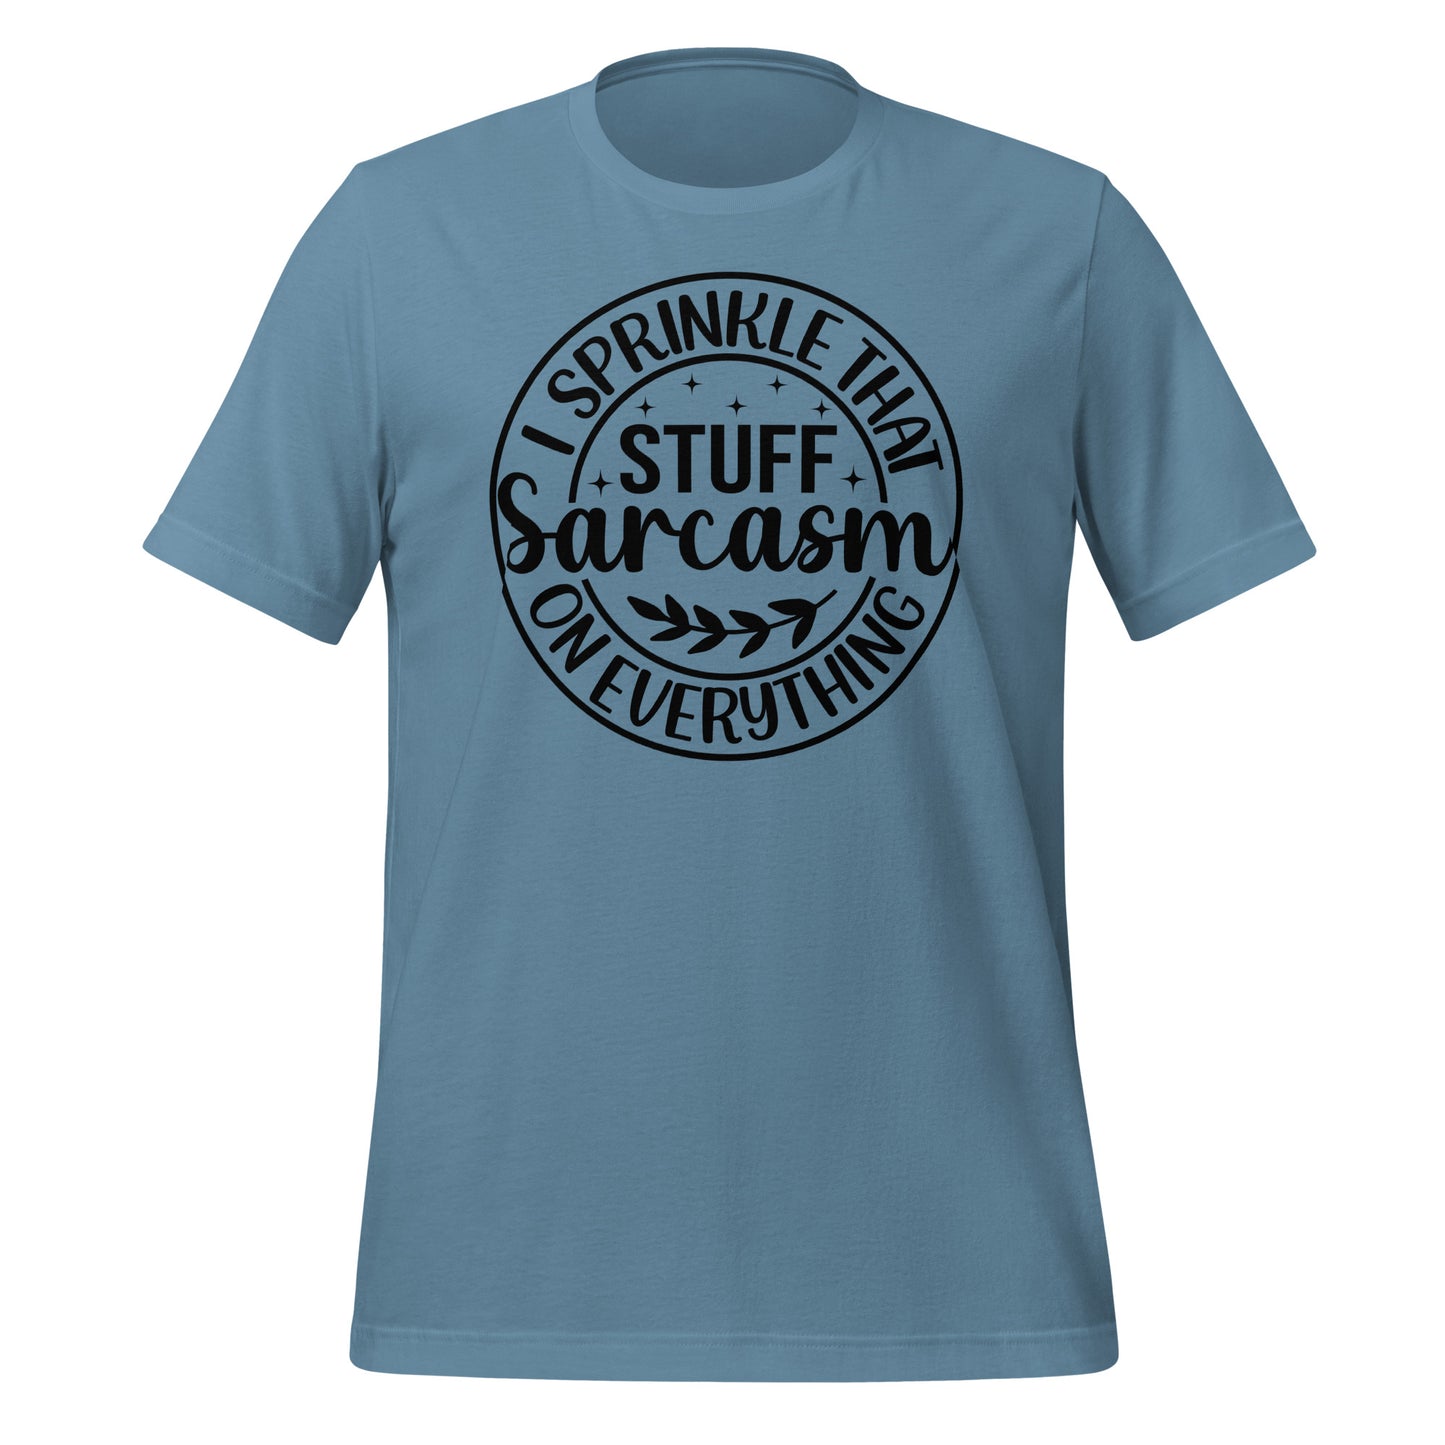 Sarcasm - I Sprinkle That Stuff on Everything TShirt